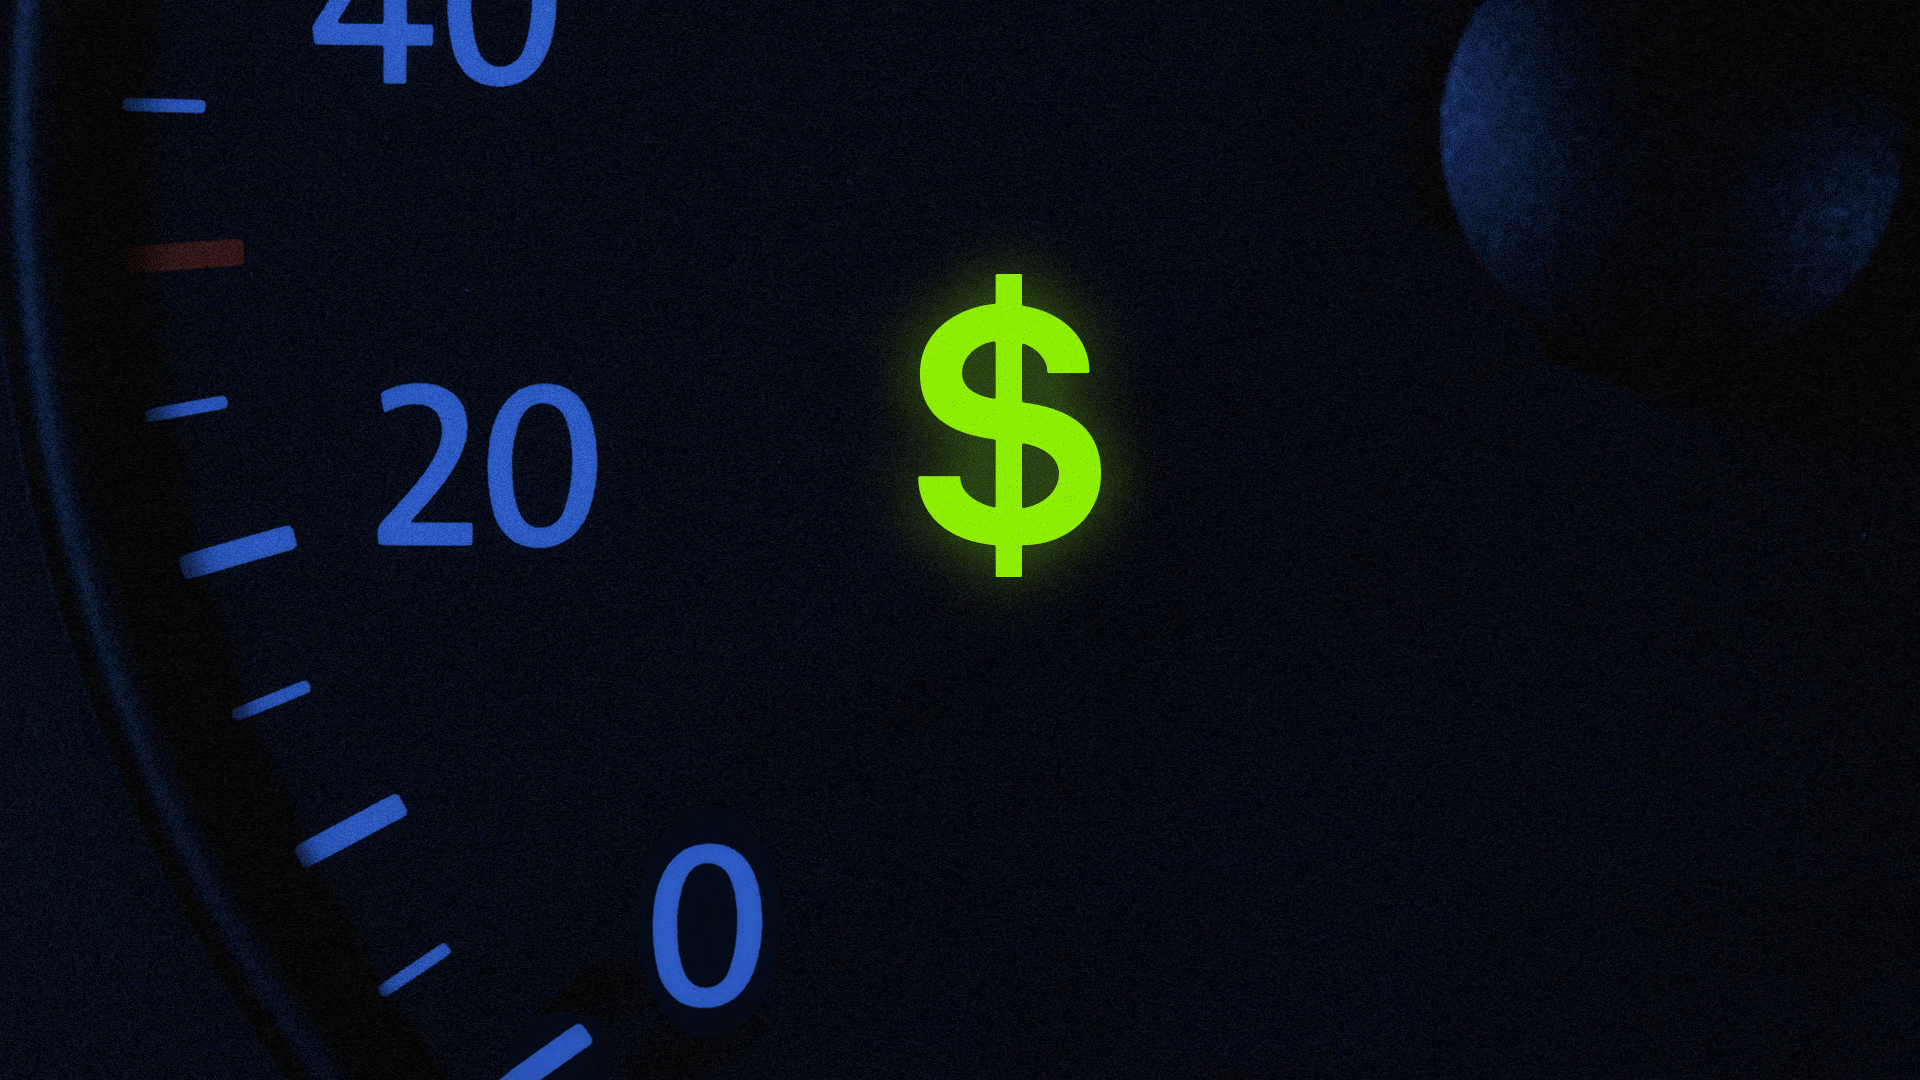 A dollar sign flashing on a car dashboard